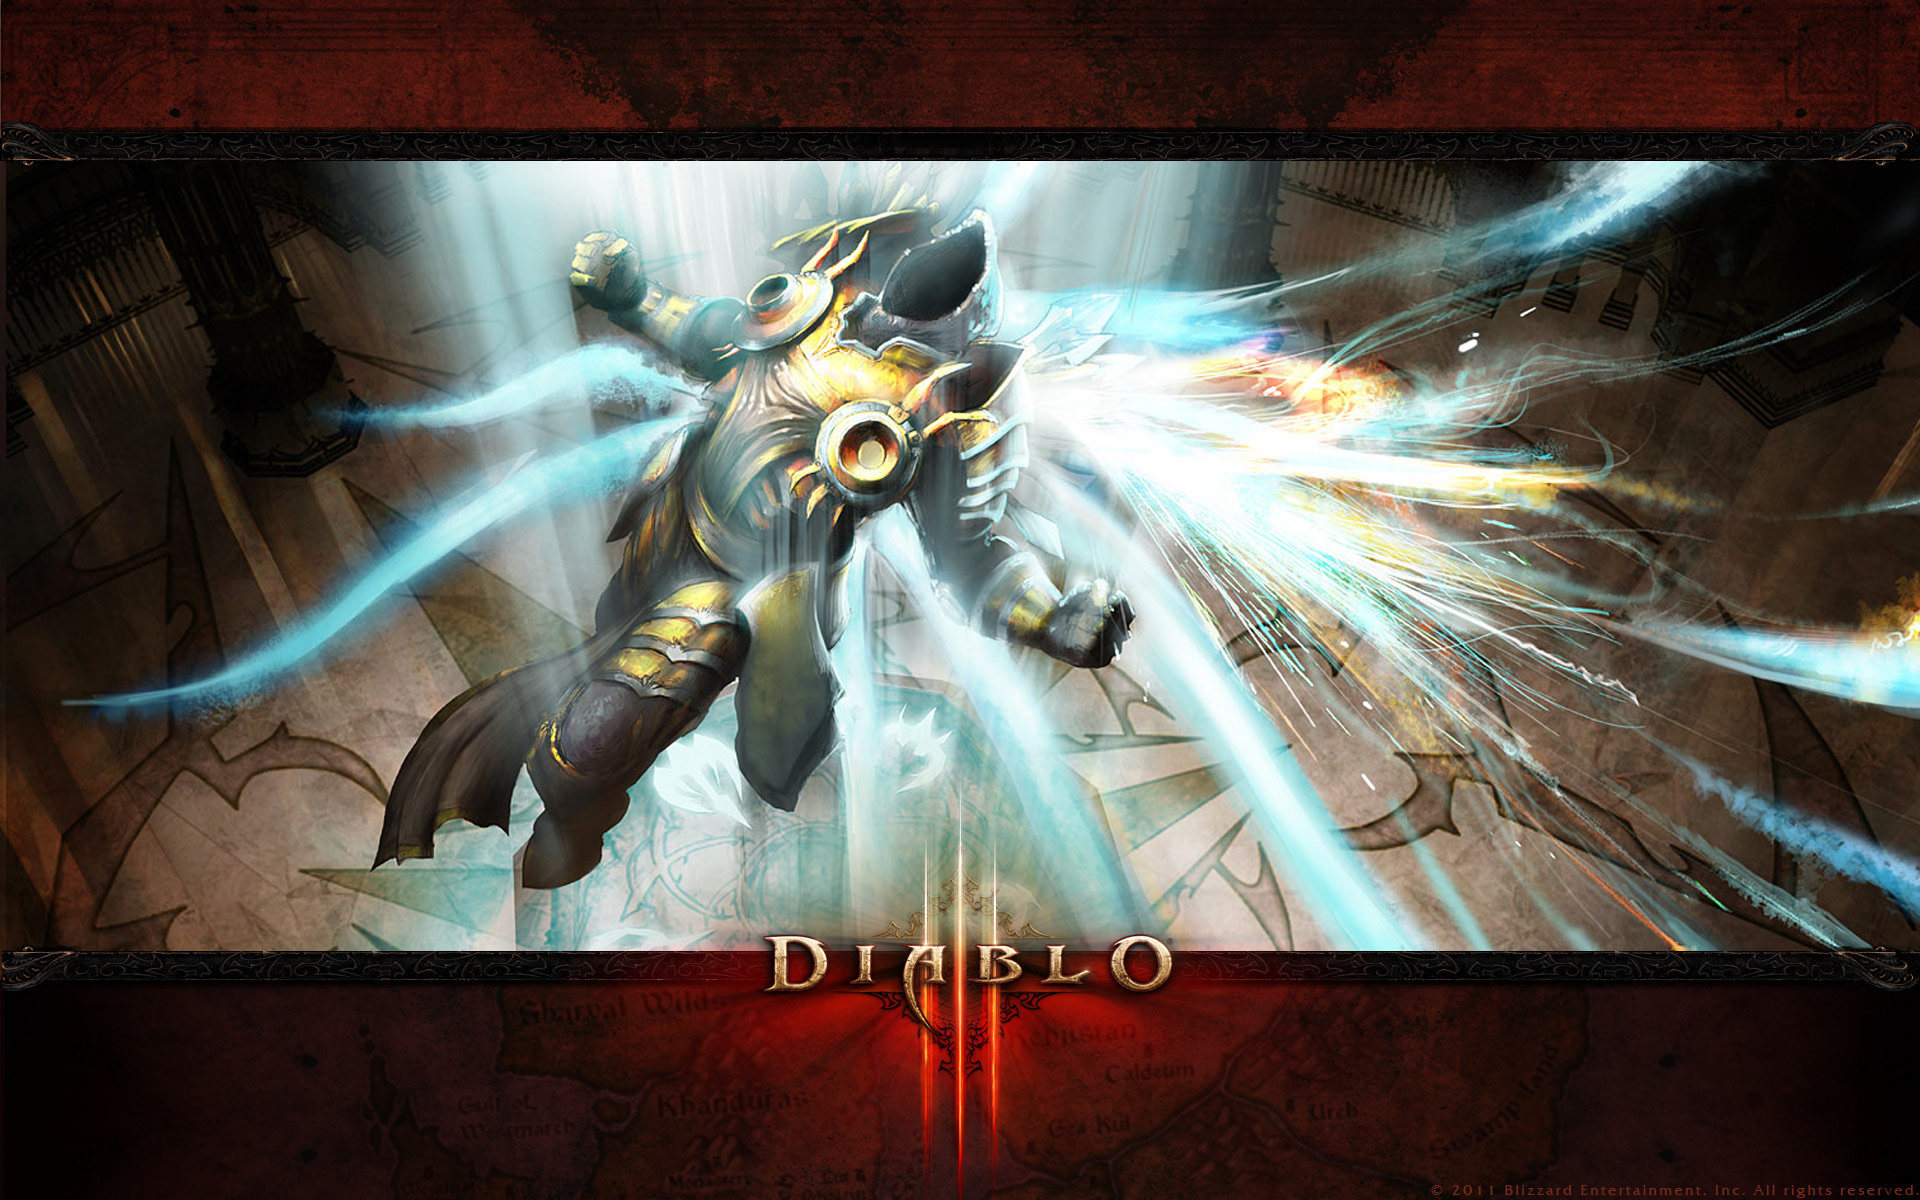 Best Diablo 3 wallpaper ID:30806 for High Resolution hd 1920x1200 computer